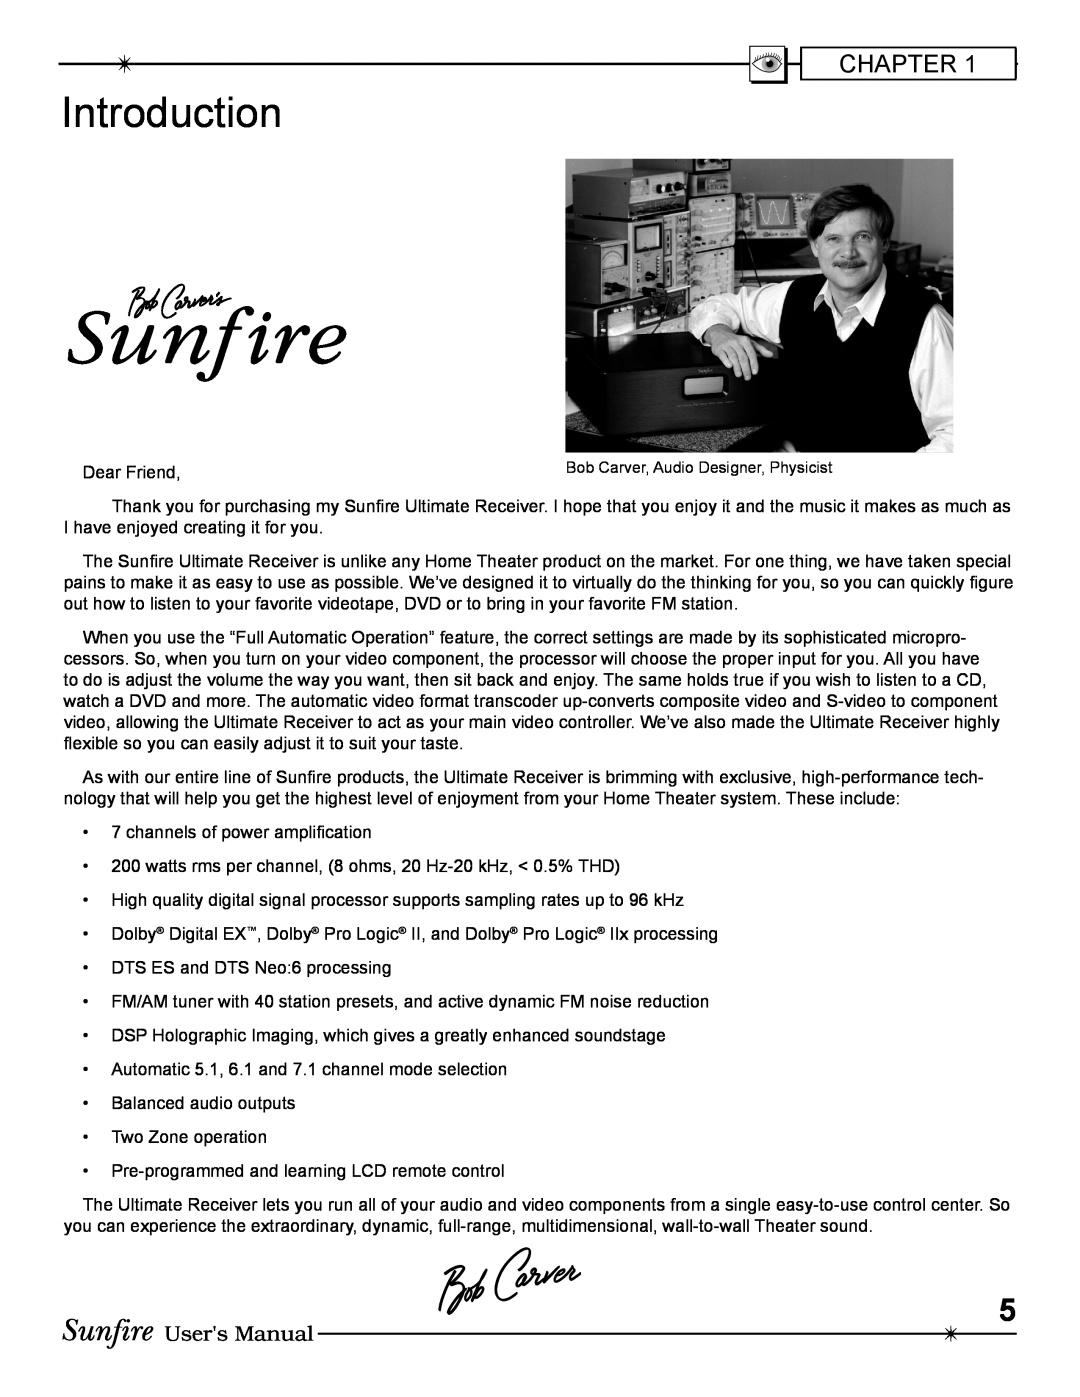 Sunfire Radio manual Introduction 